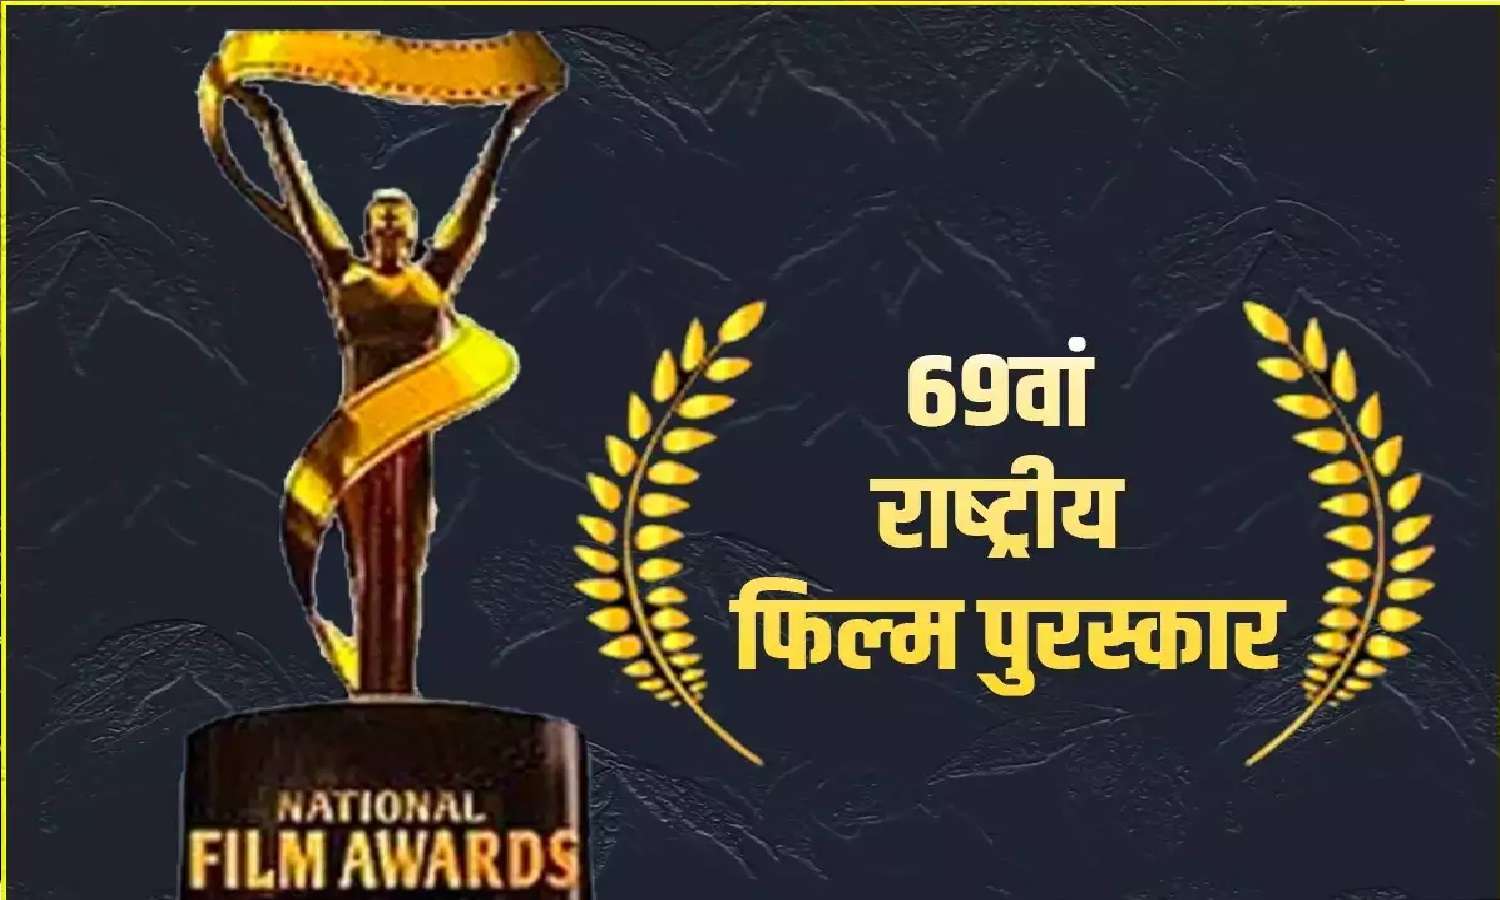 National Film Award Winner List: अल्लू अर्जुन बेस्ट एक्टर तो रोकेट्री को मिला बेस्ट फीचर फिल्म का अवार्ड